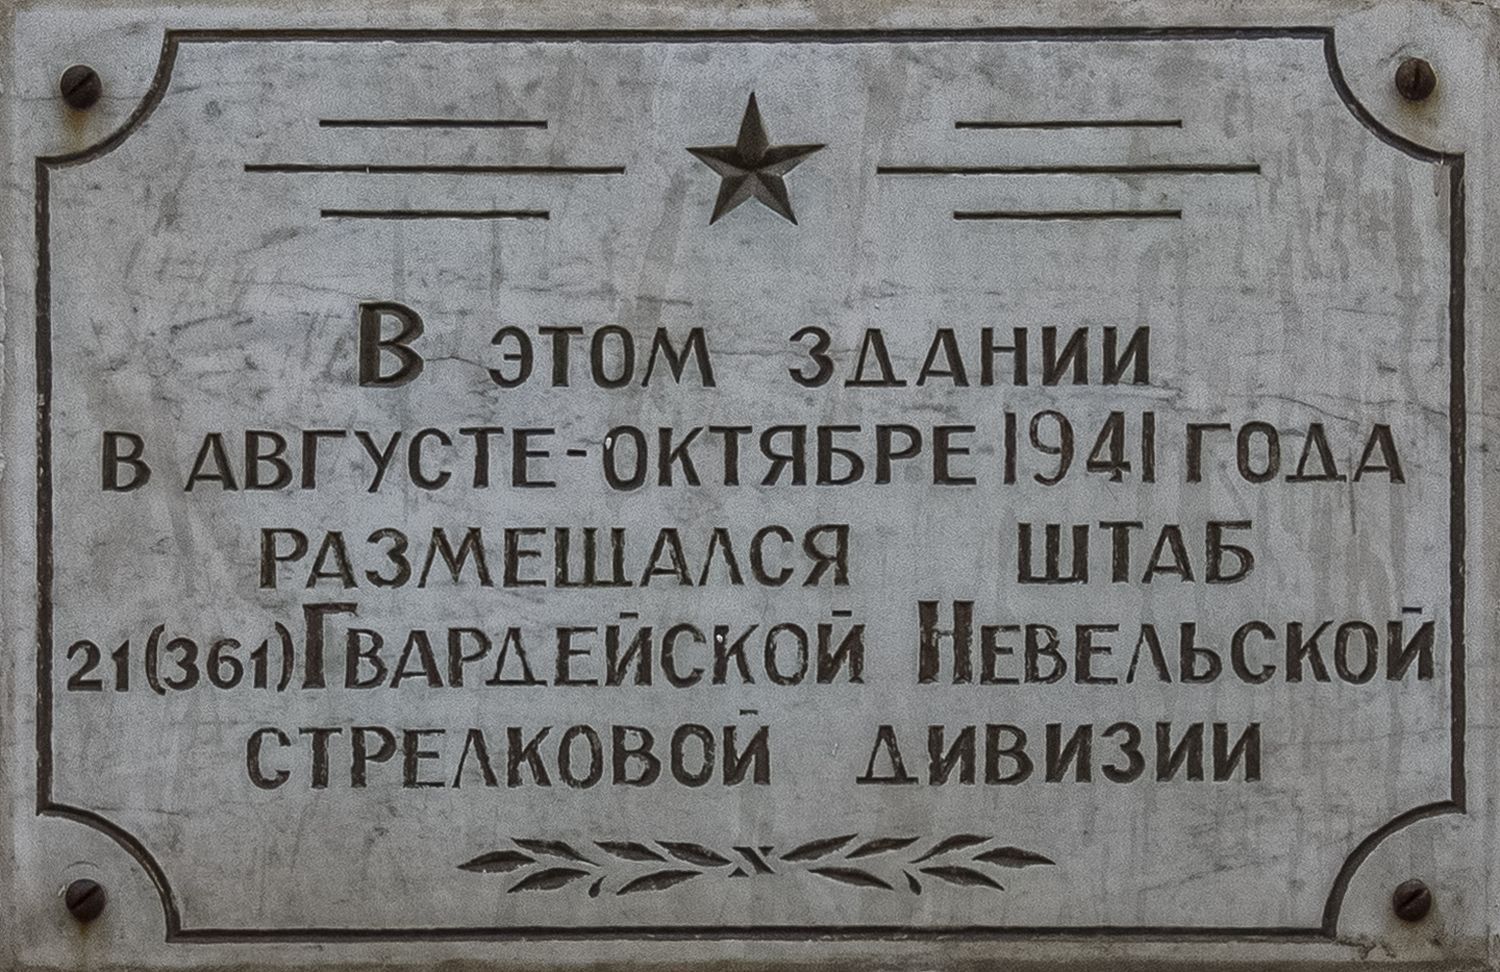 Ufa, Улица Ленина, 22 / Улица Октябрьской Революции, 1. Ufa — Memorial plaques